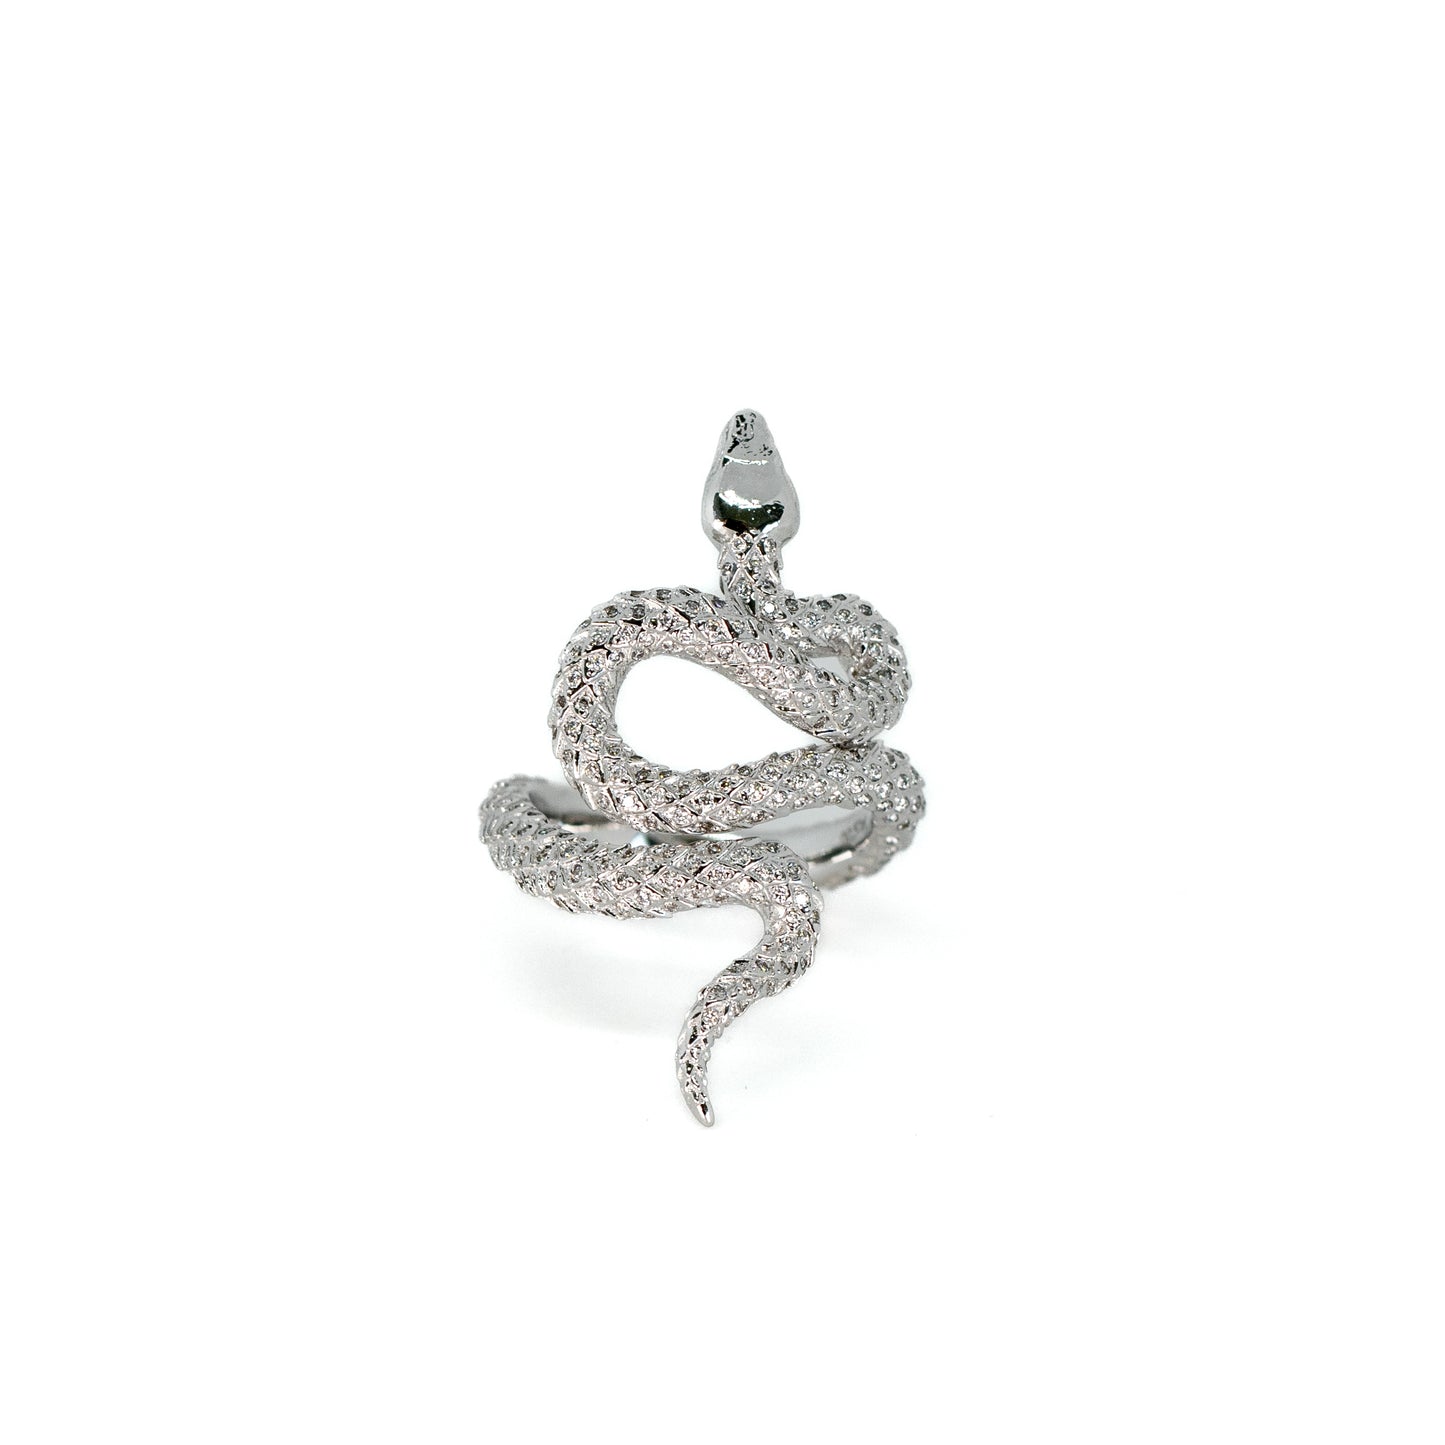 Diamond encrusted snake ring Hong Kong